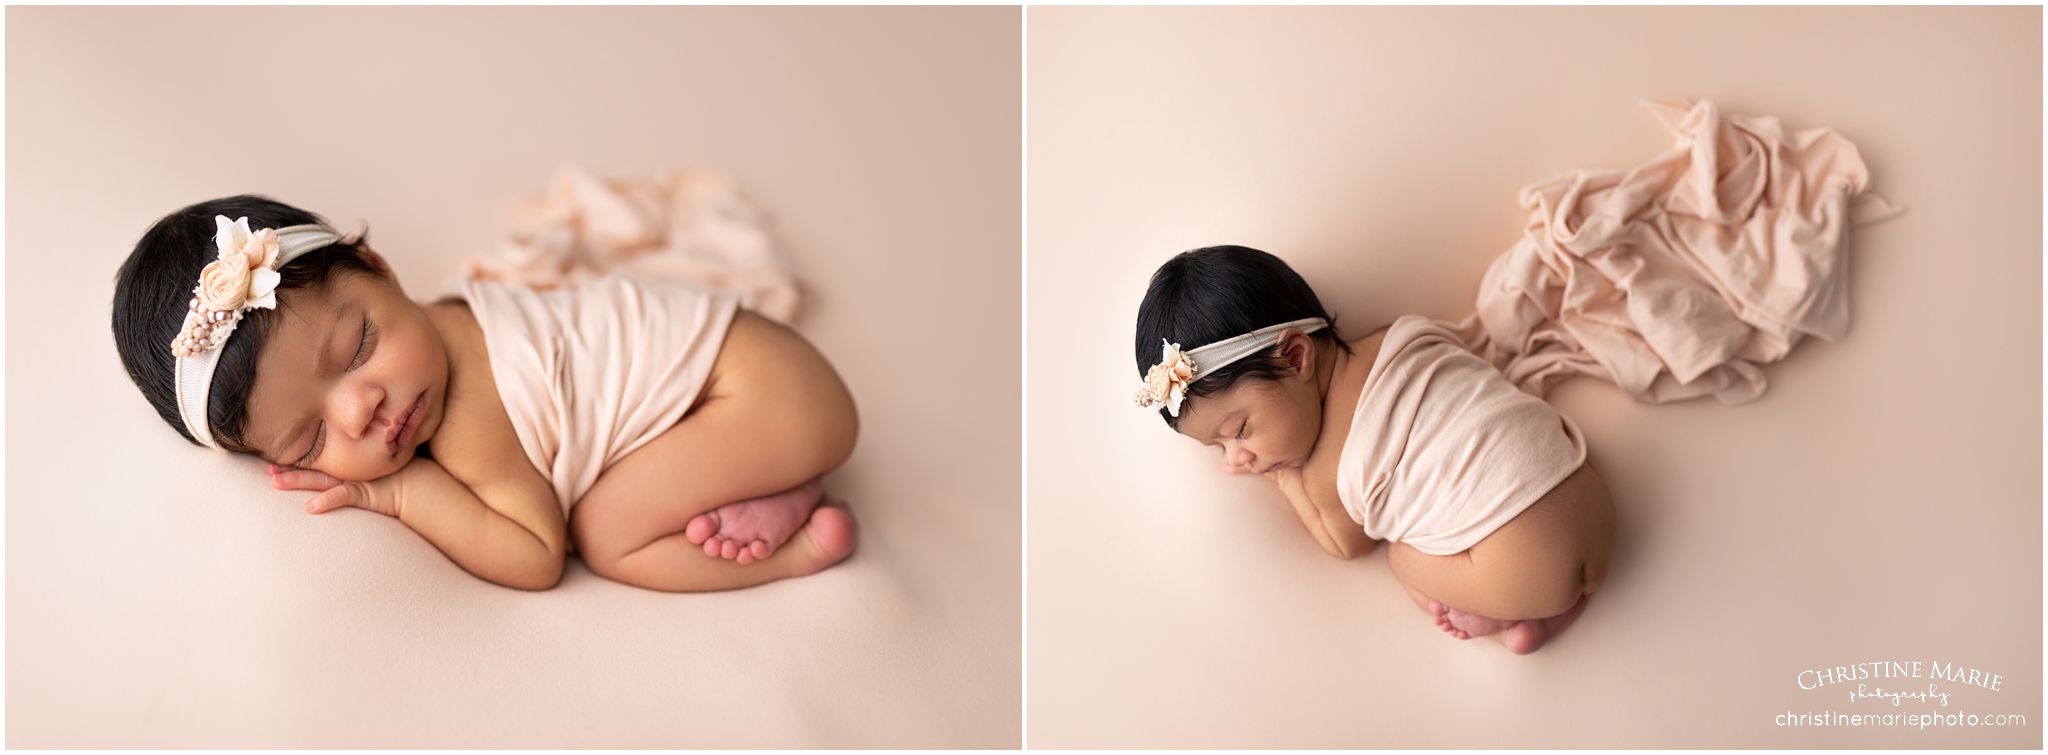 cumming newborn photographer, christine marie photography